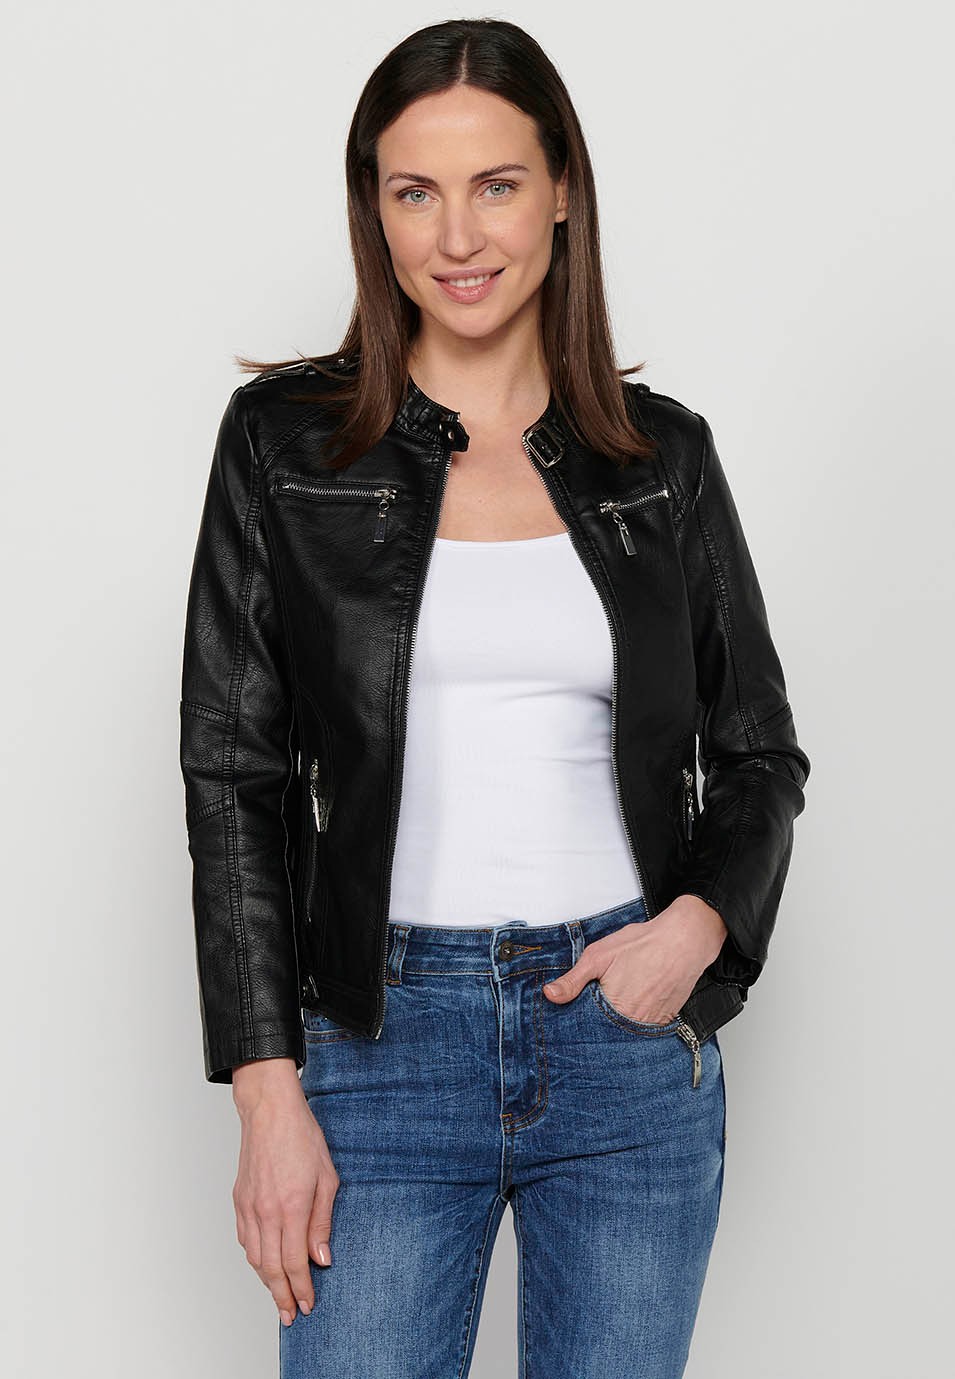 Long sleeve jacket, mandarin collar, black color for women